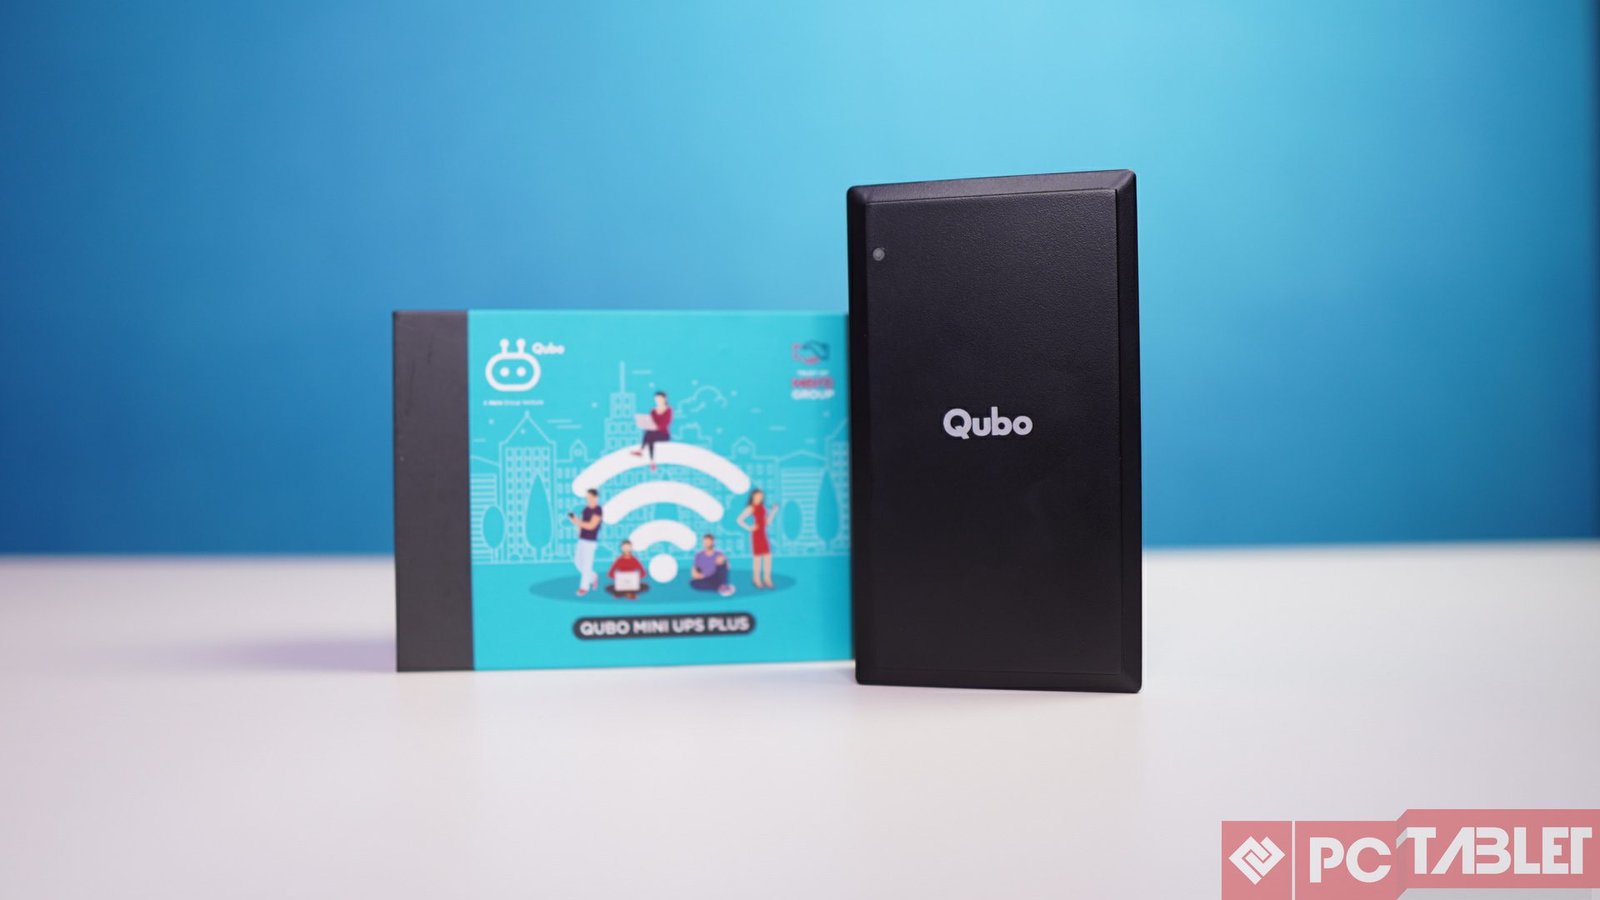 Qubo Mini UPS Plus 7